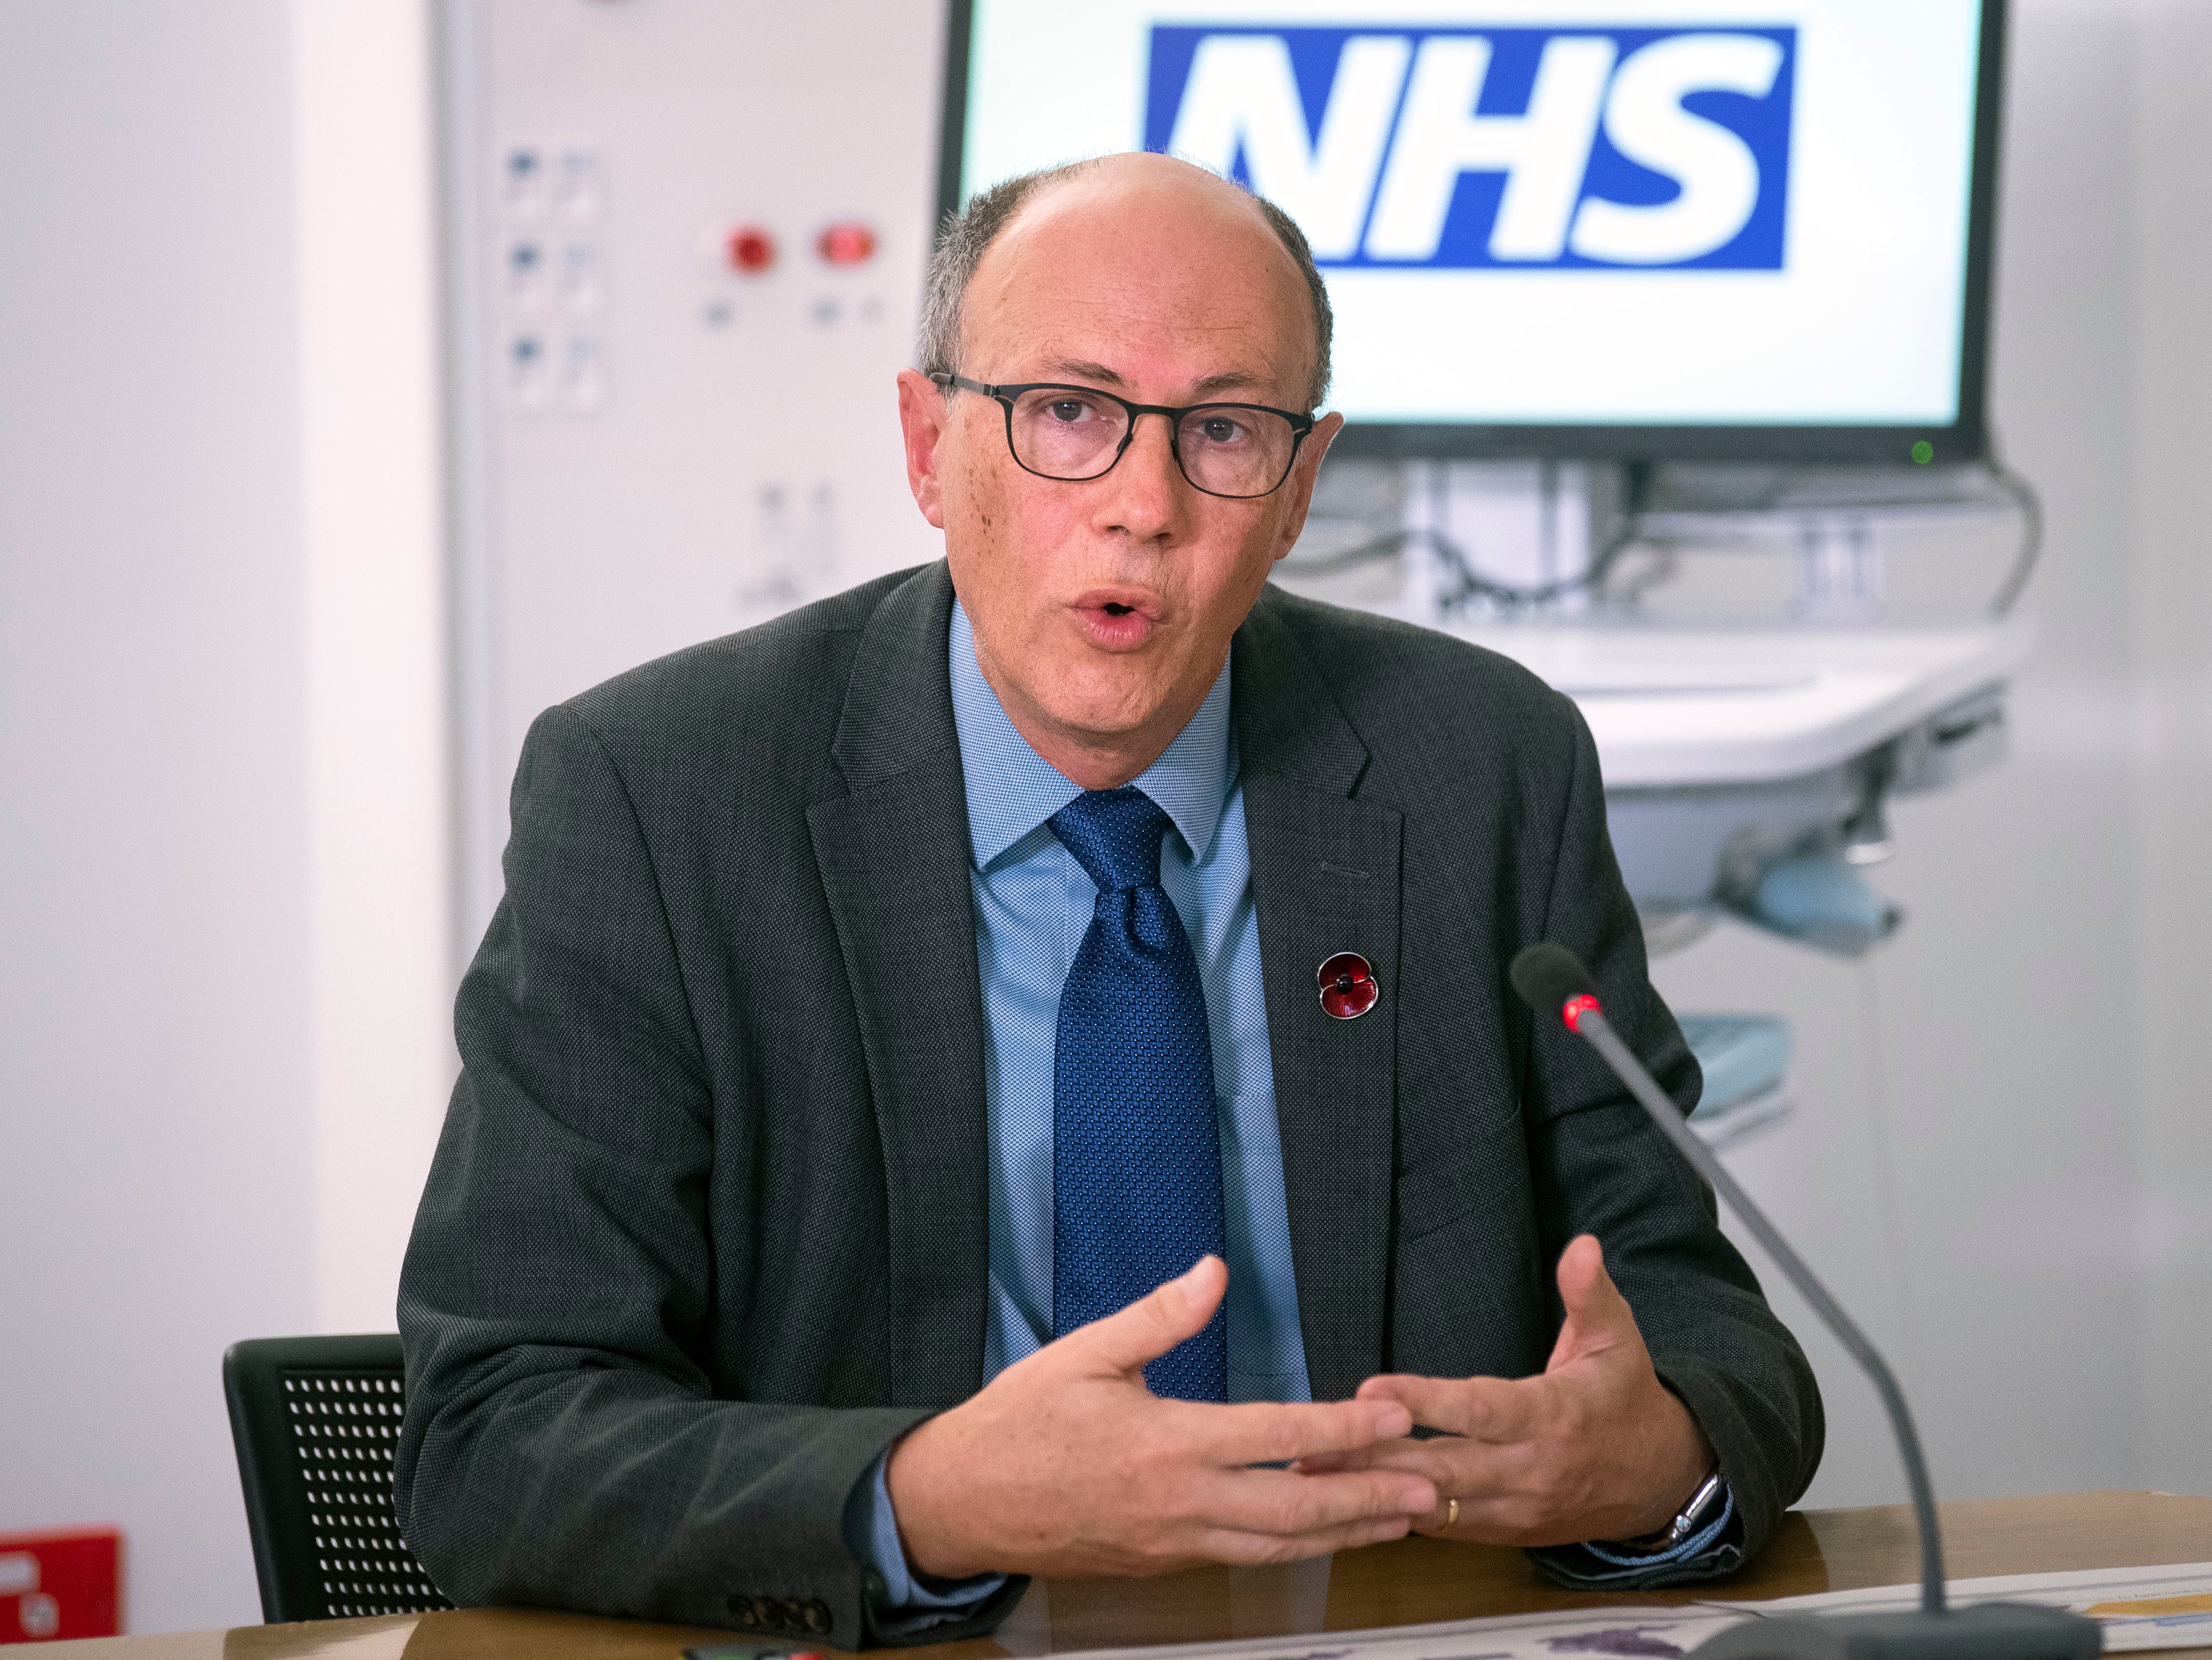 Sir Stephen Powis, NHS England’s national medical director